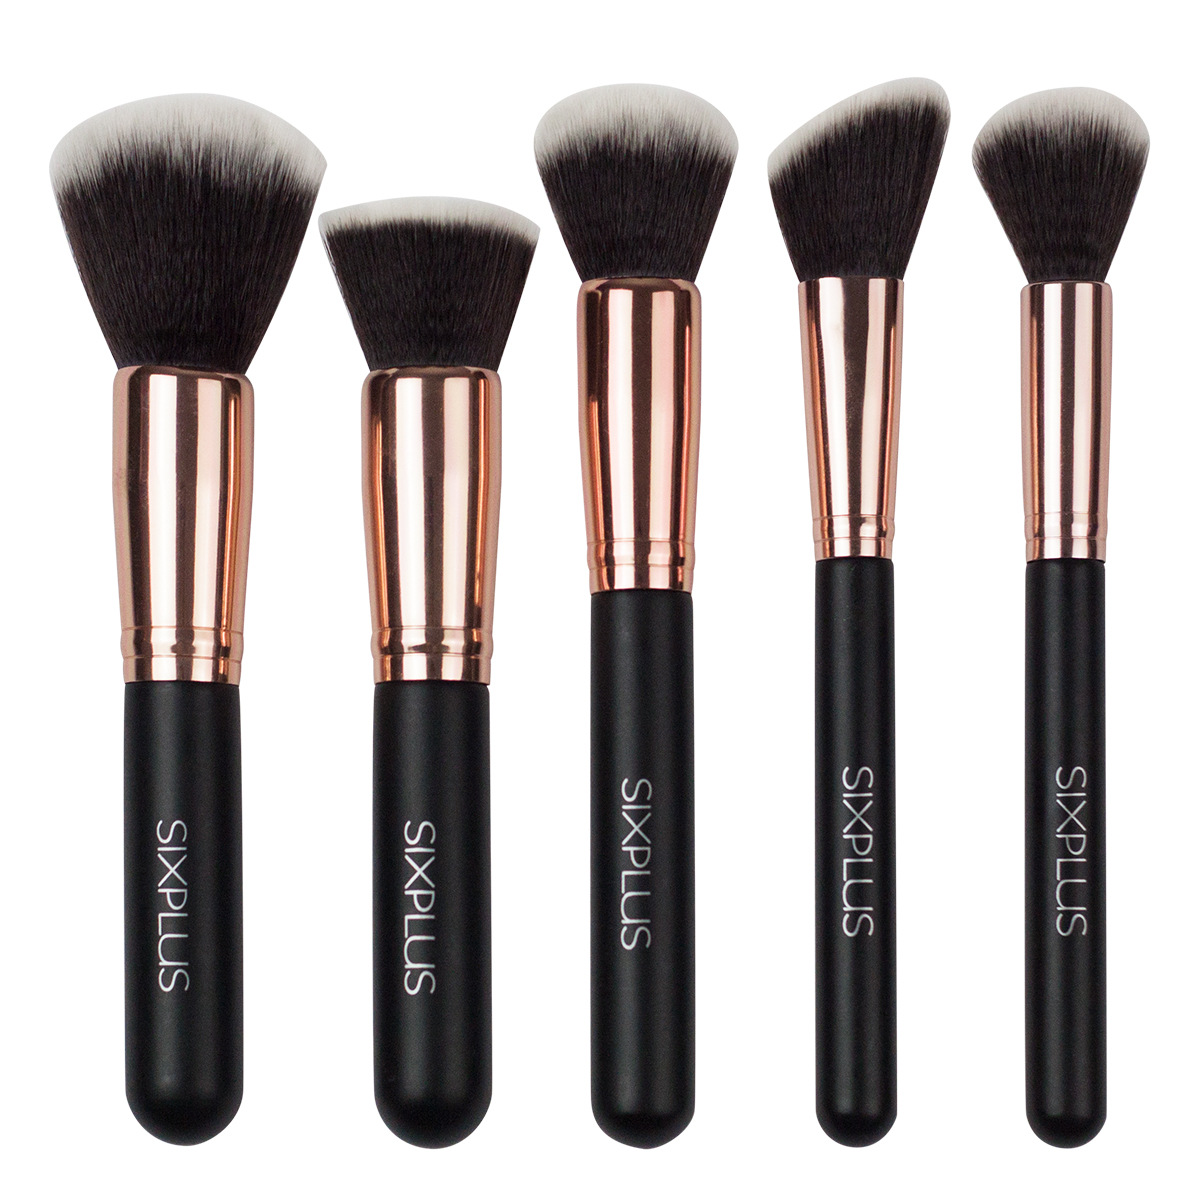 SIXPLUS 11 Pcs Makeup Brushes Set Tools Cosmetic Brush Holder Bag Face Foundation Make Up Sleeve Kit